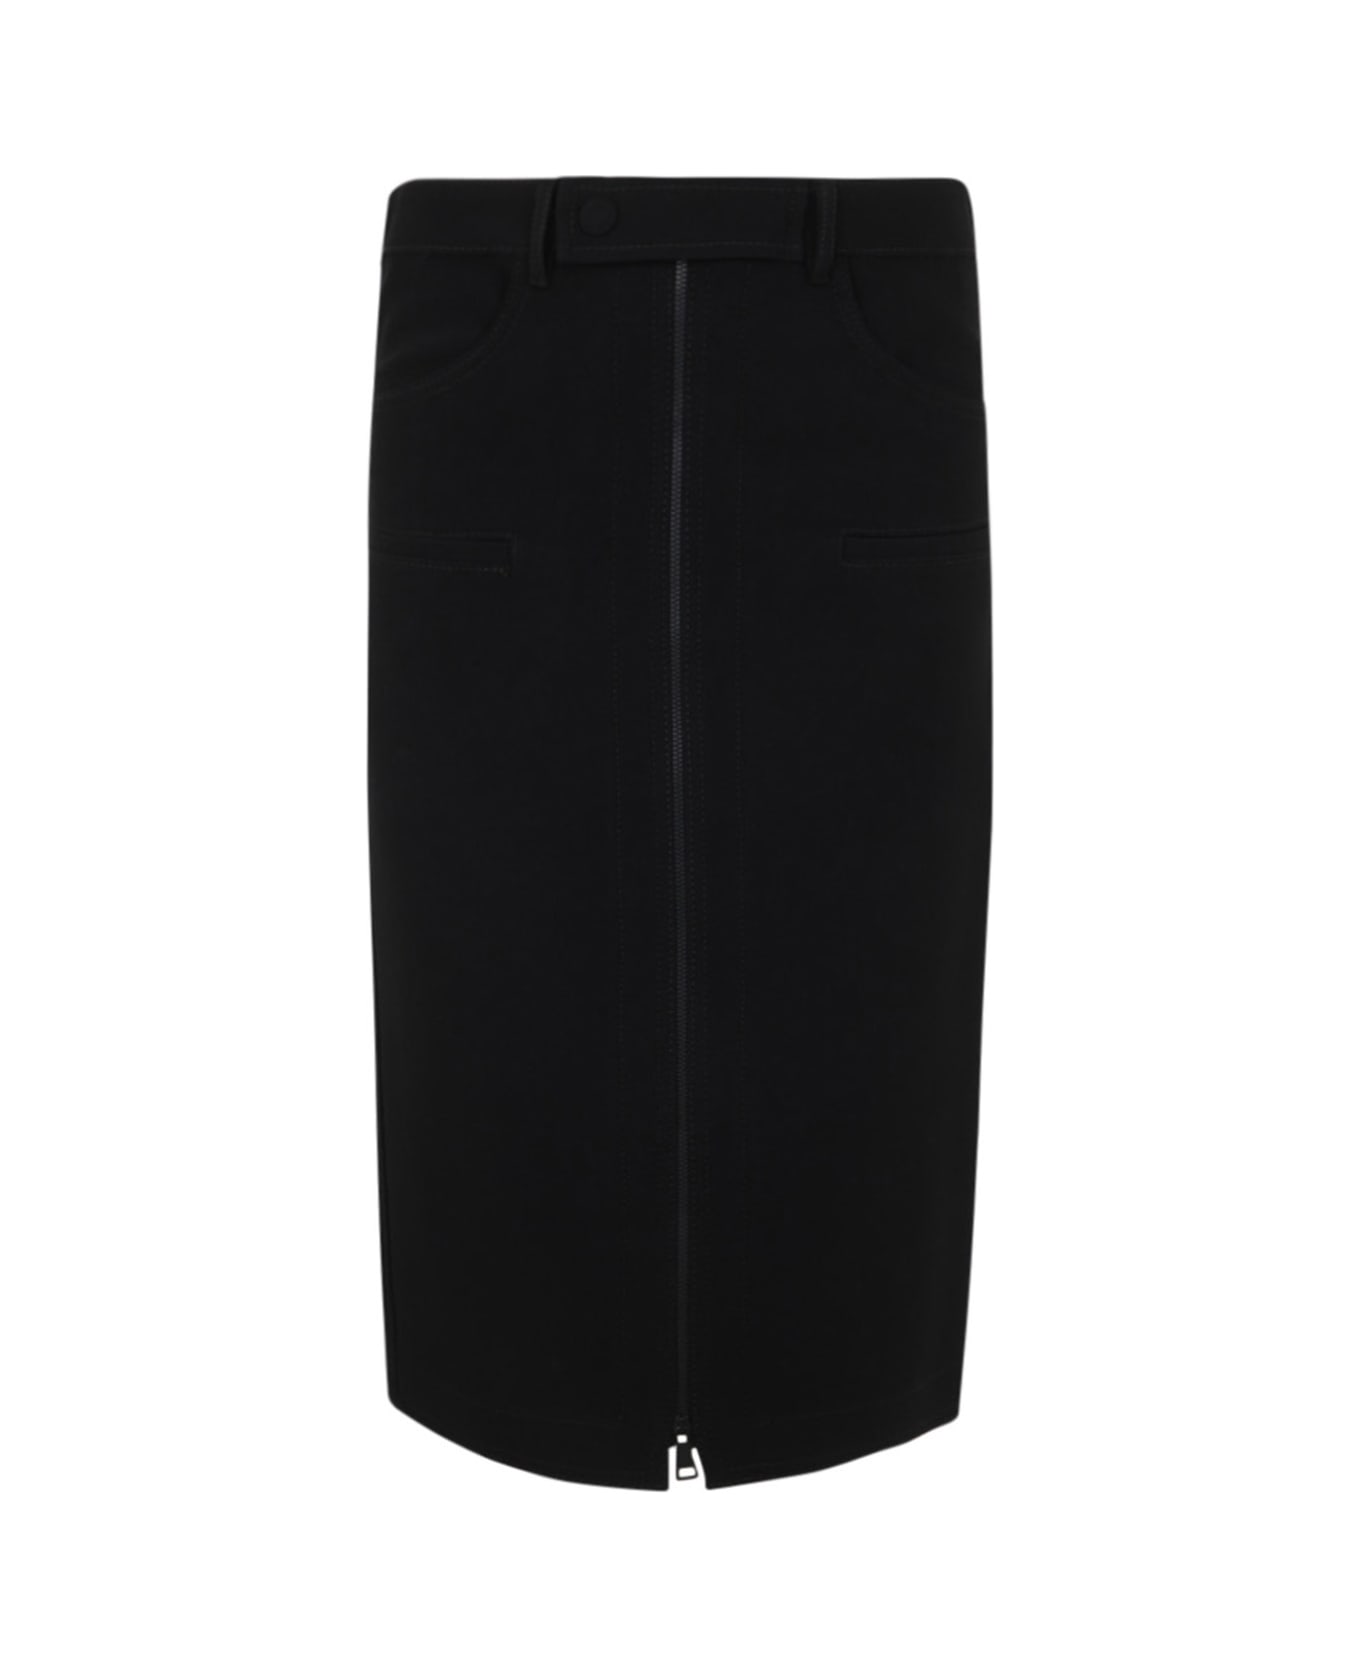 N.21 Longuette Pencil Skirt - Black スカート